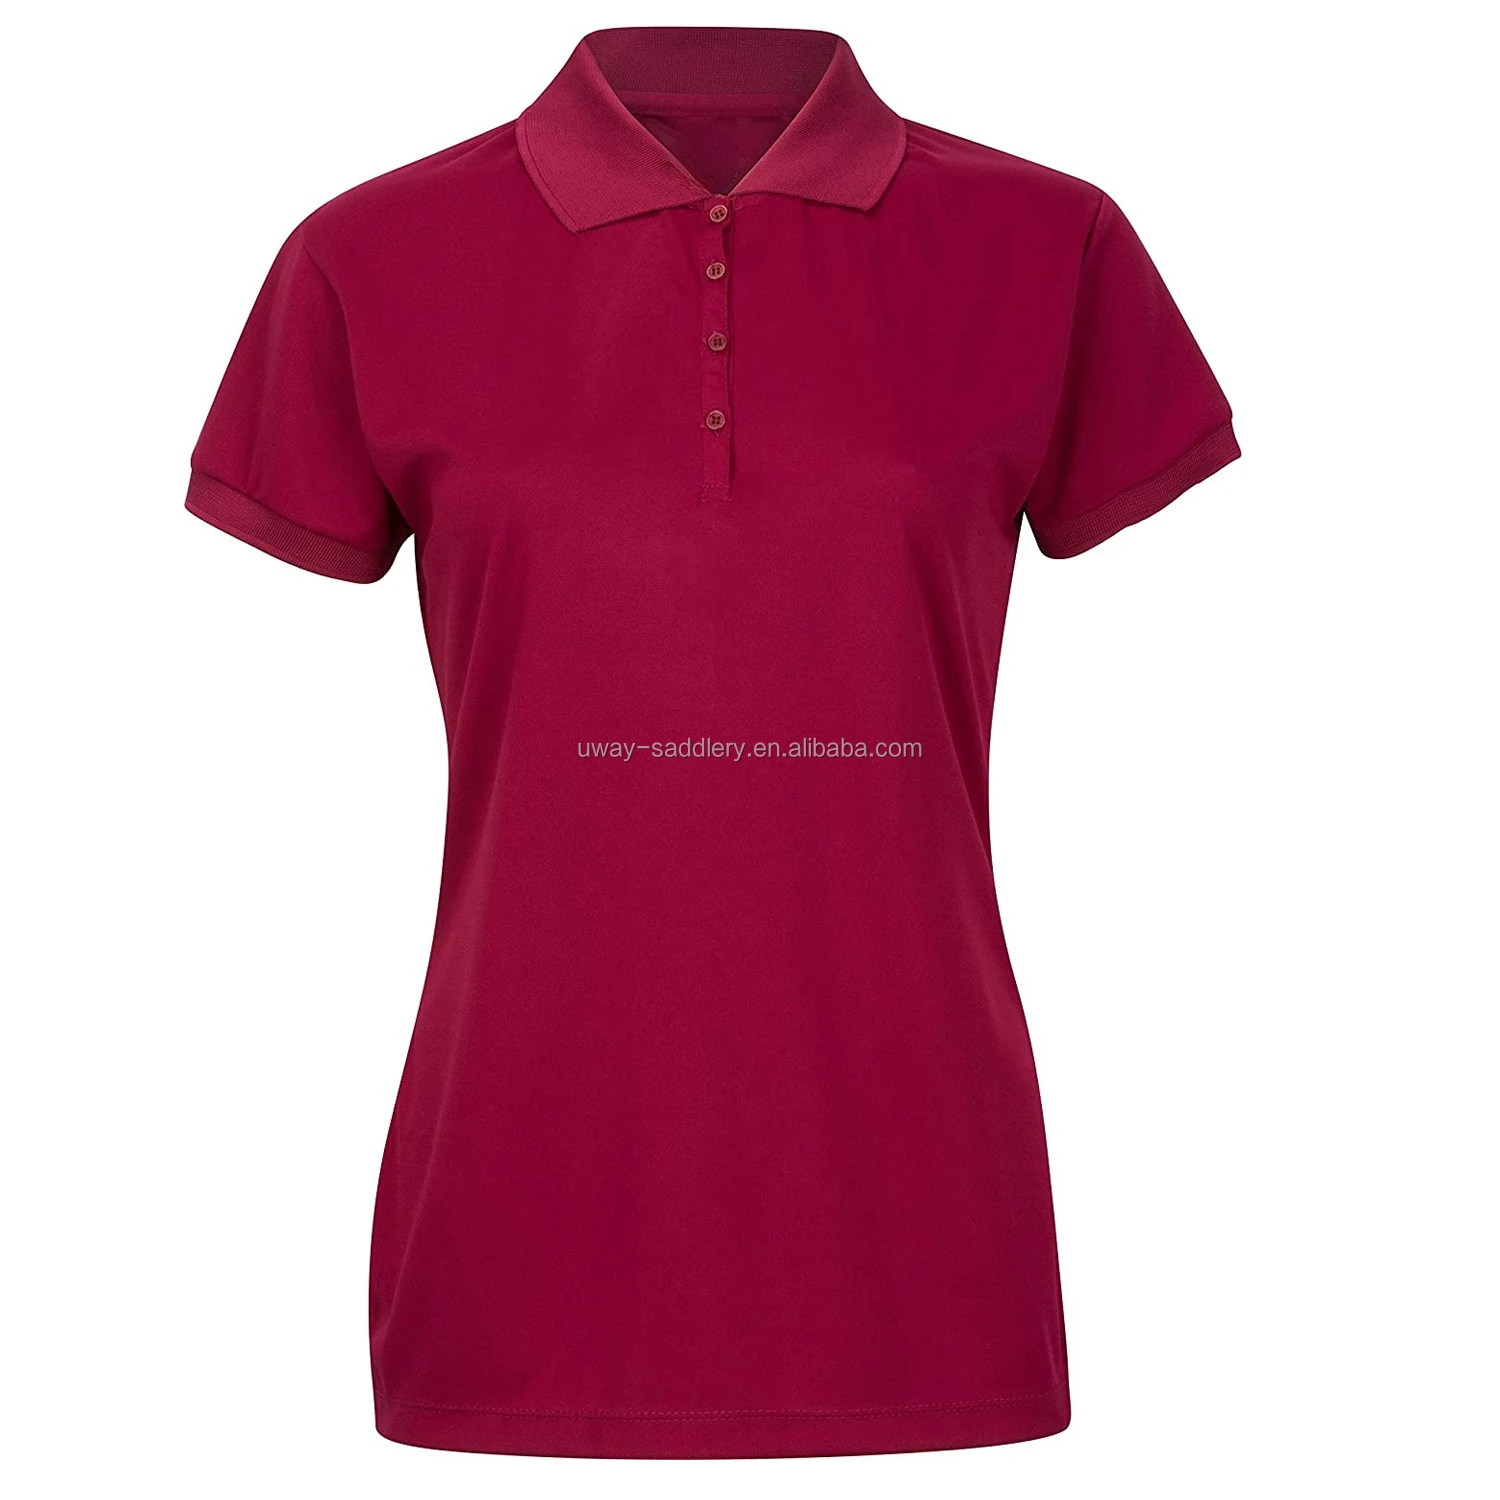 High-Performance Moisture Wicking Fabric Premium Polo T-Shirt for Junior Girls 